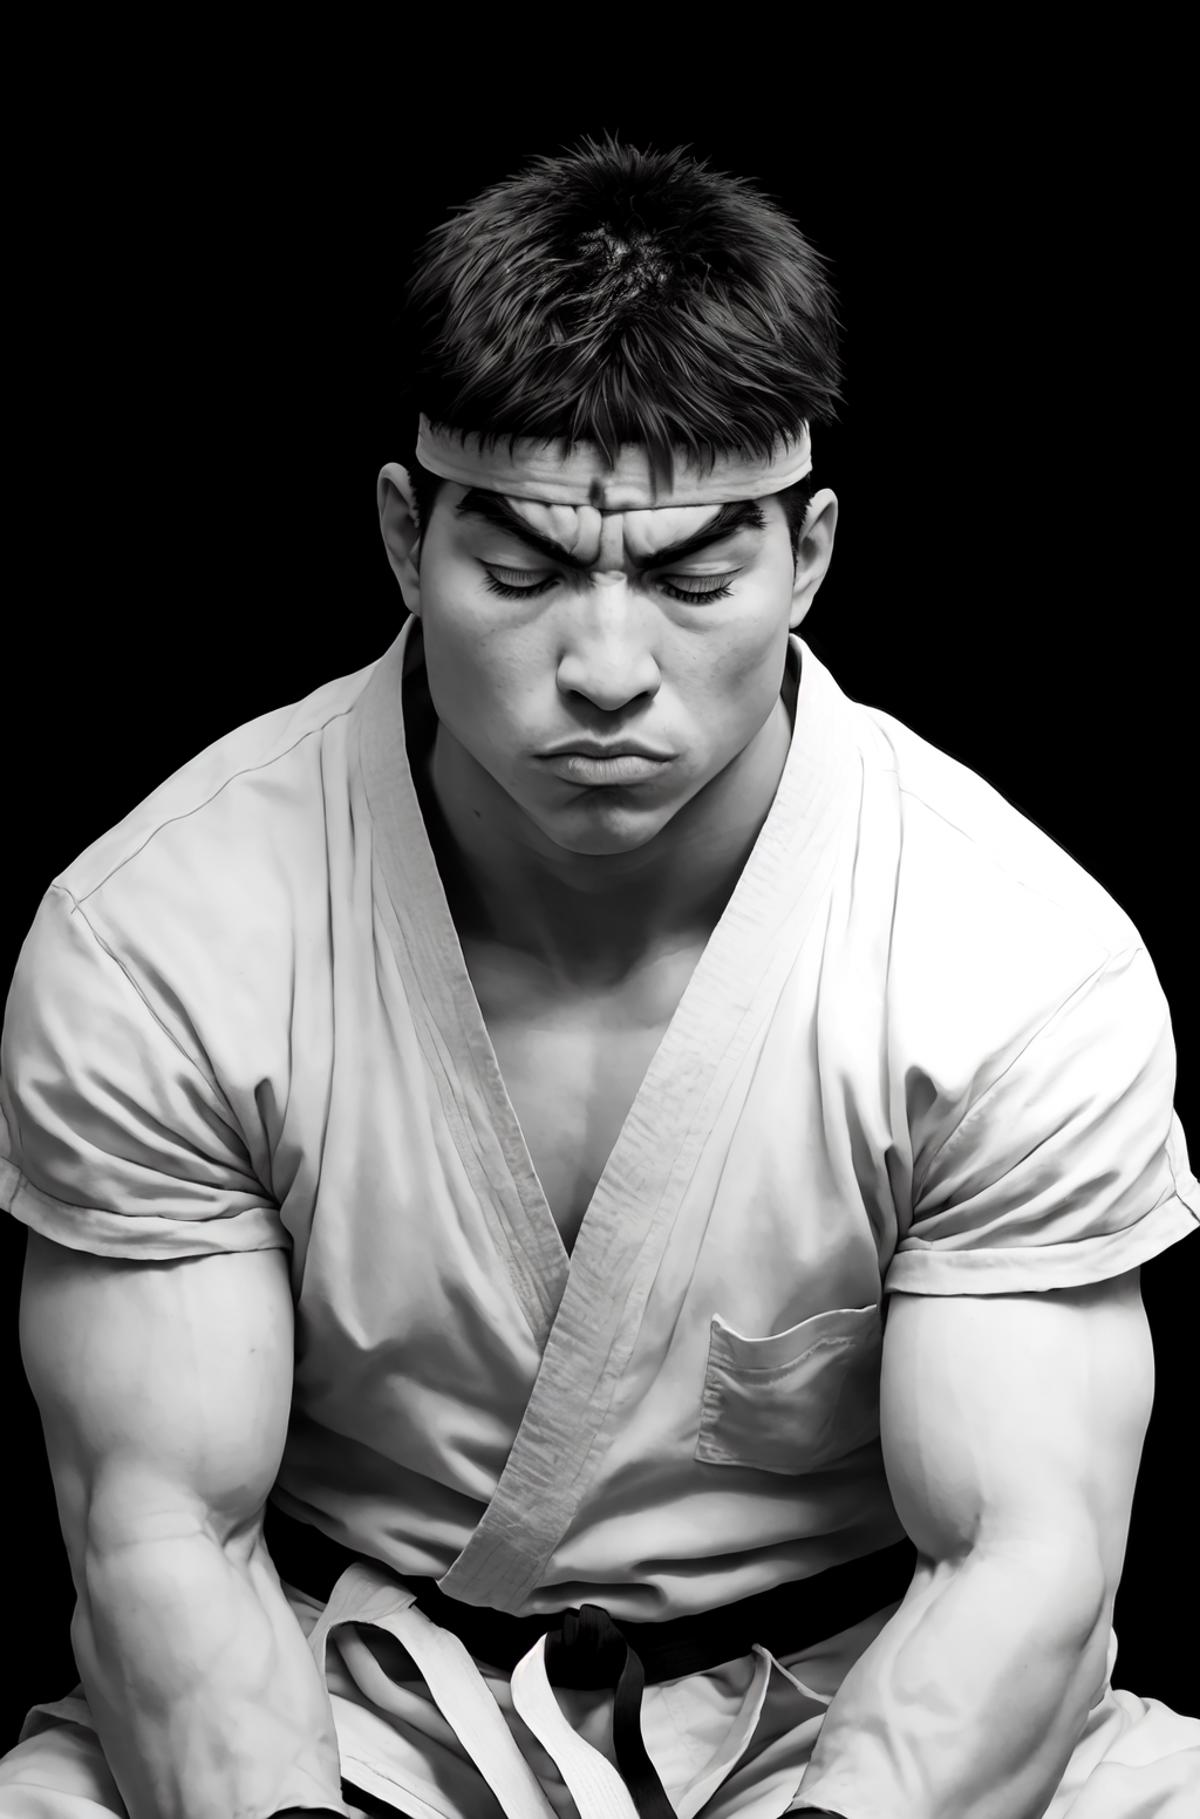 Ryu (Street Fighter Series) image by LDWorksDavid